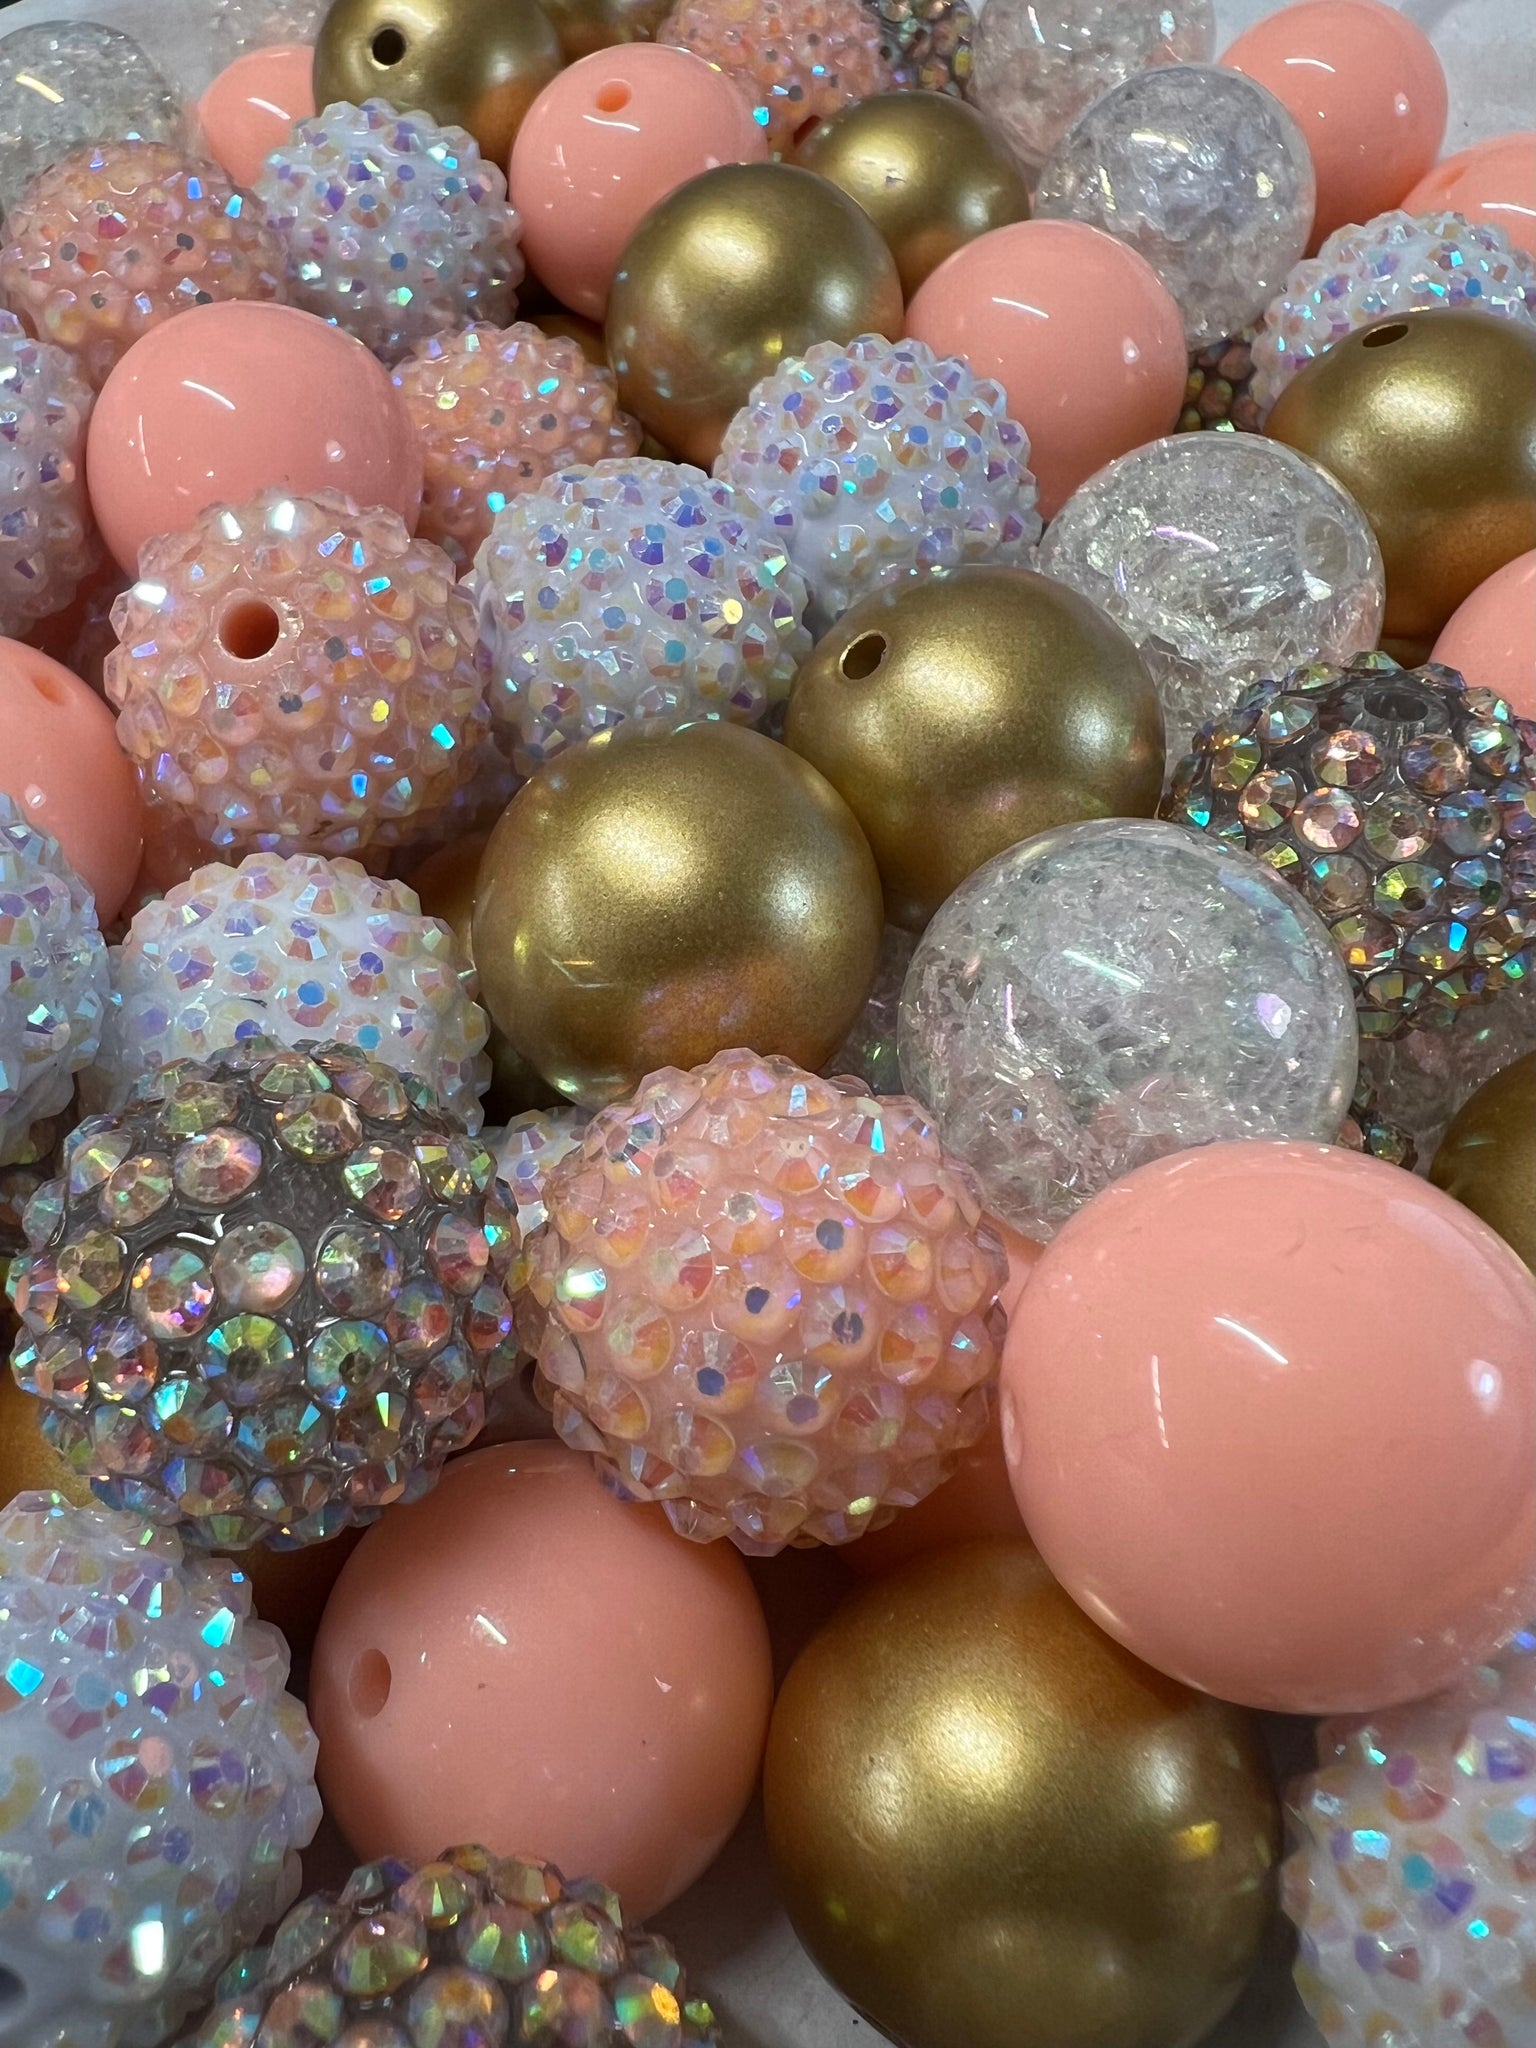 20mm Peach Acrylic Bubblegum Beads